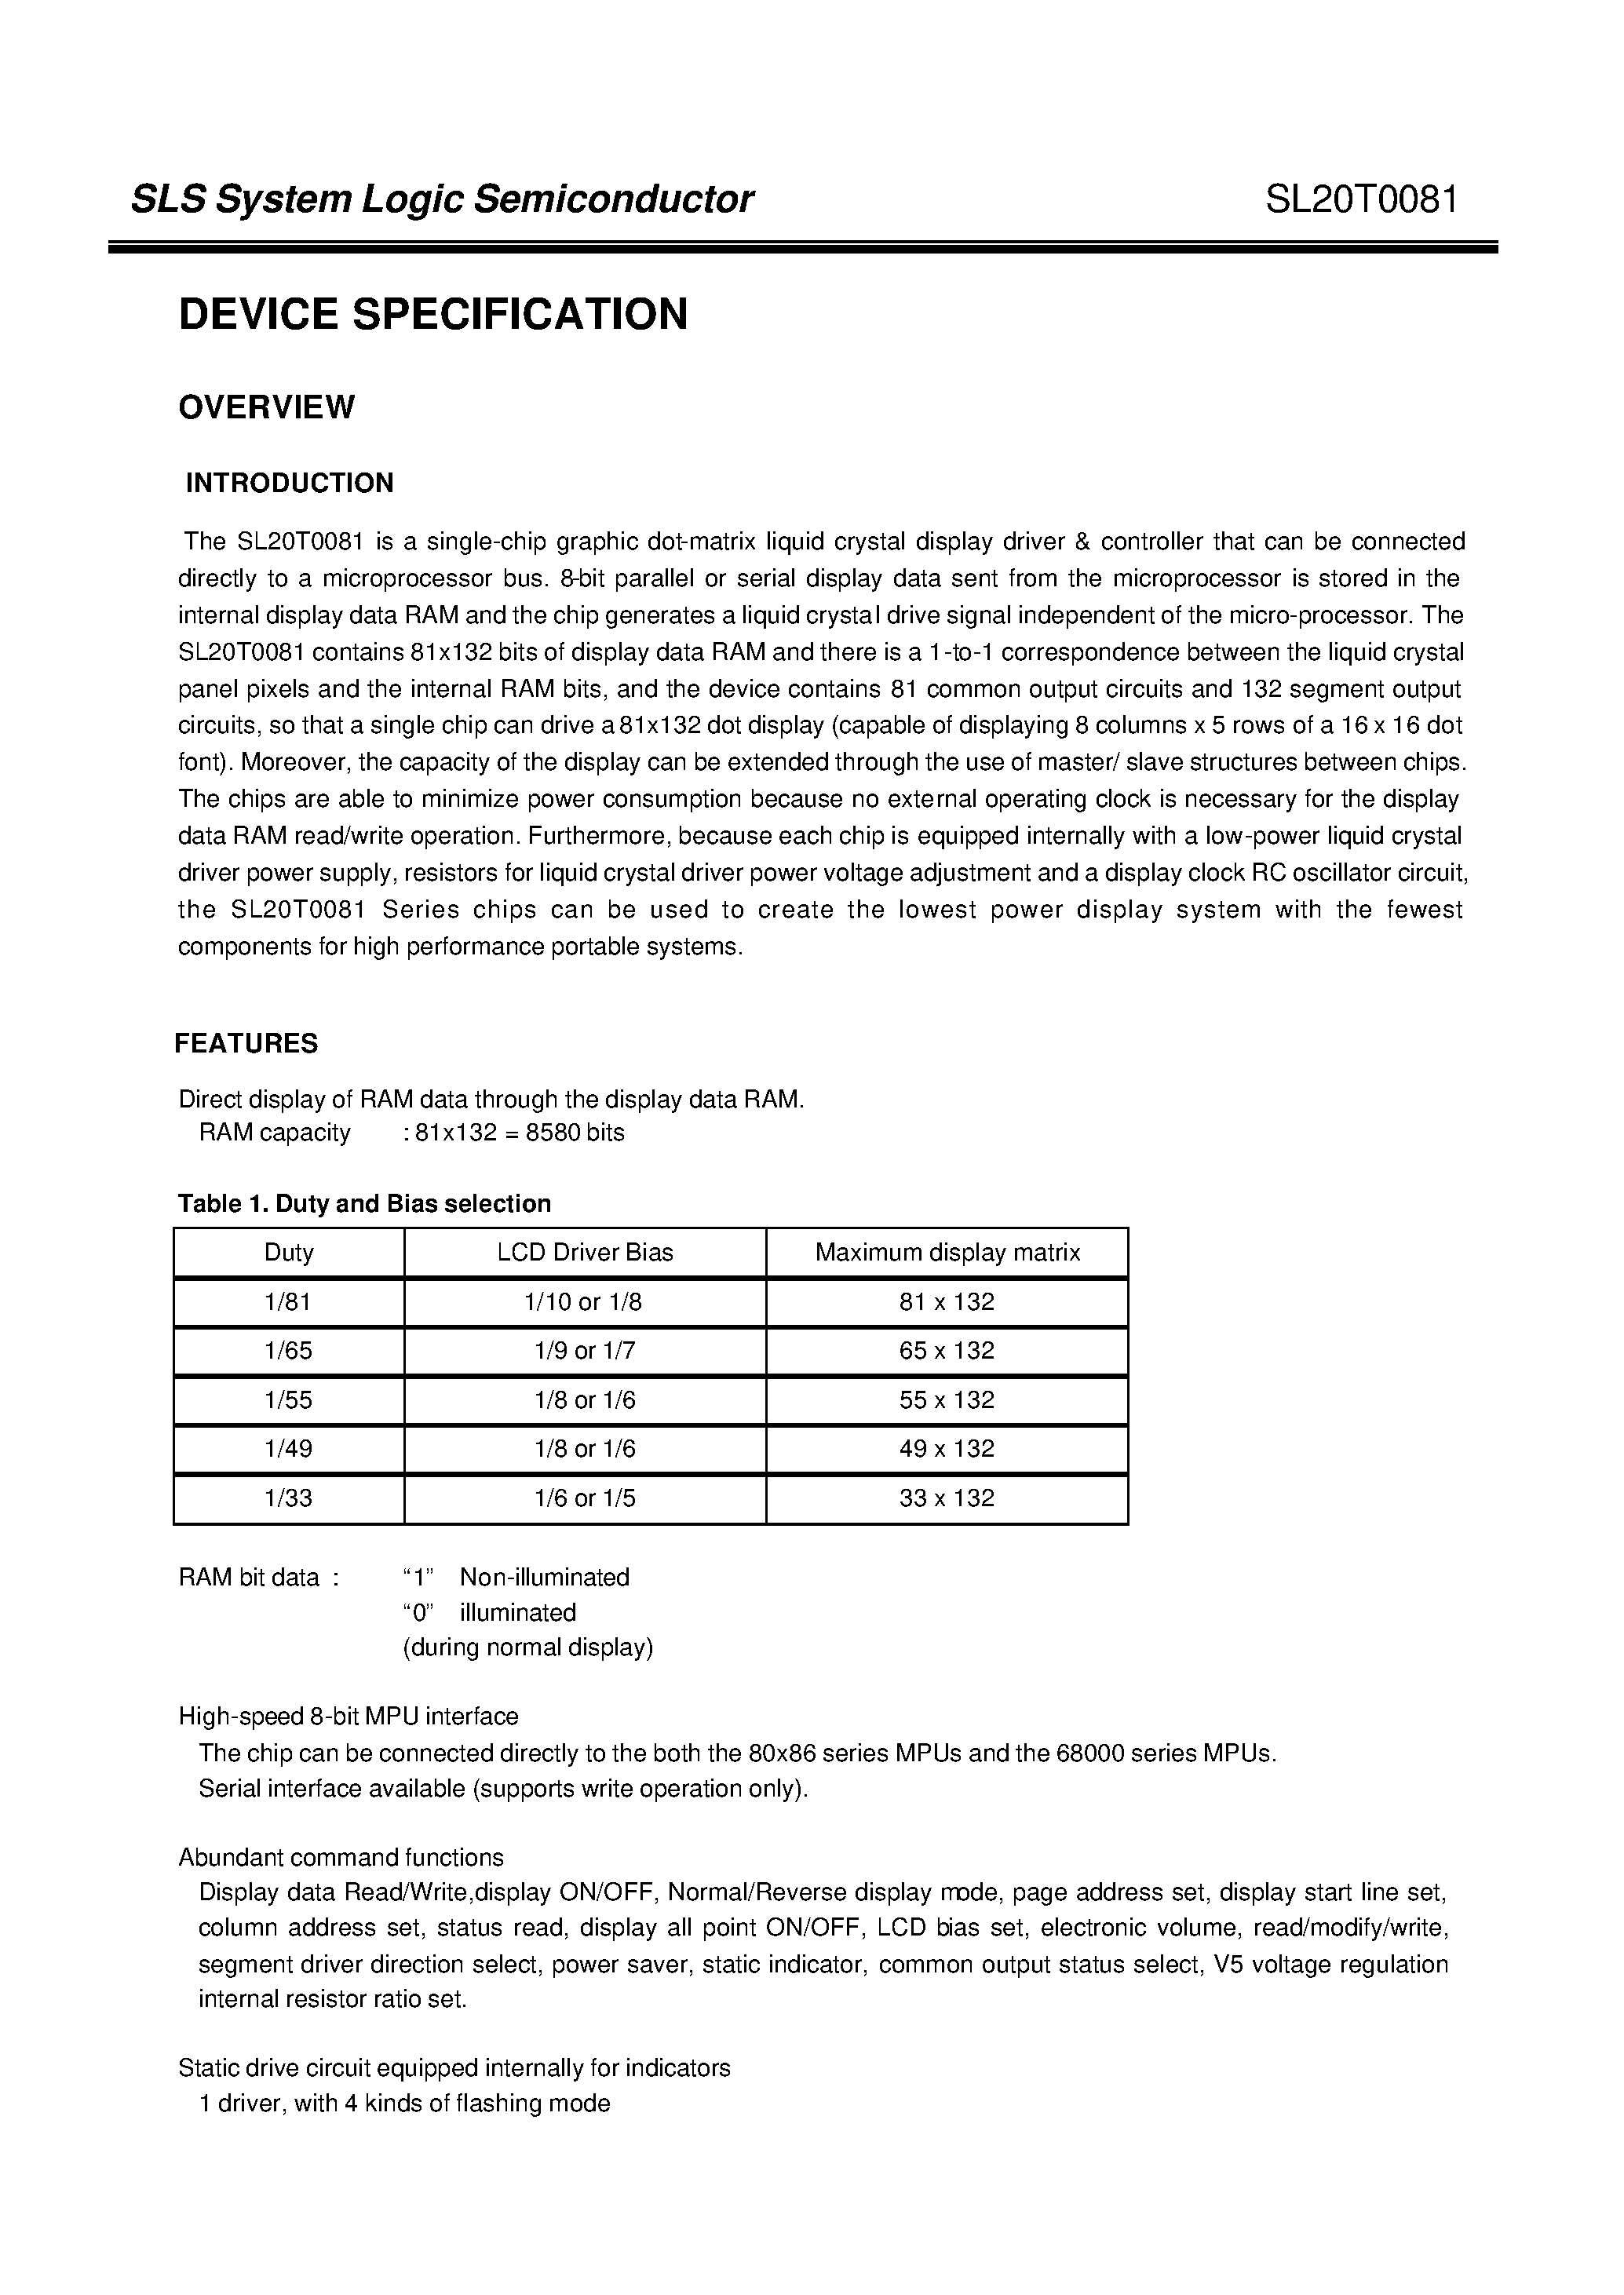 Datasheet SL20T0081 - SLS System Logic Semiconductor page 2